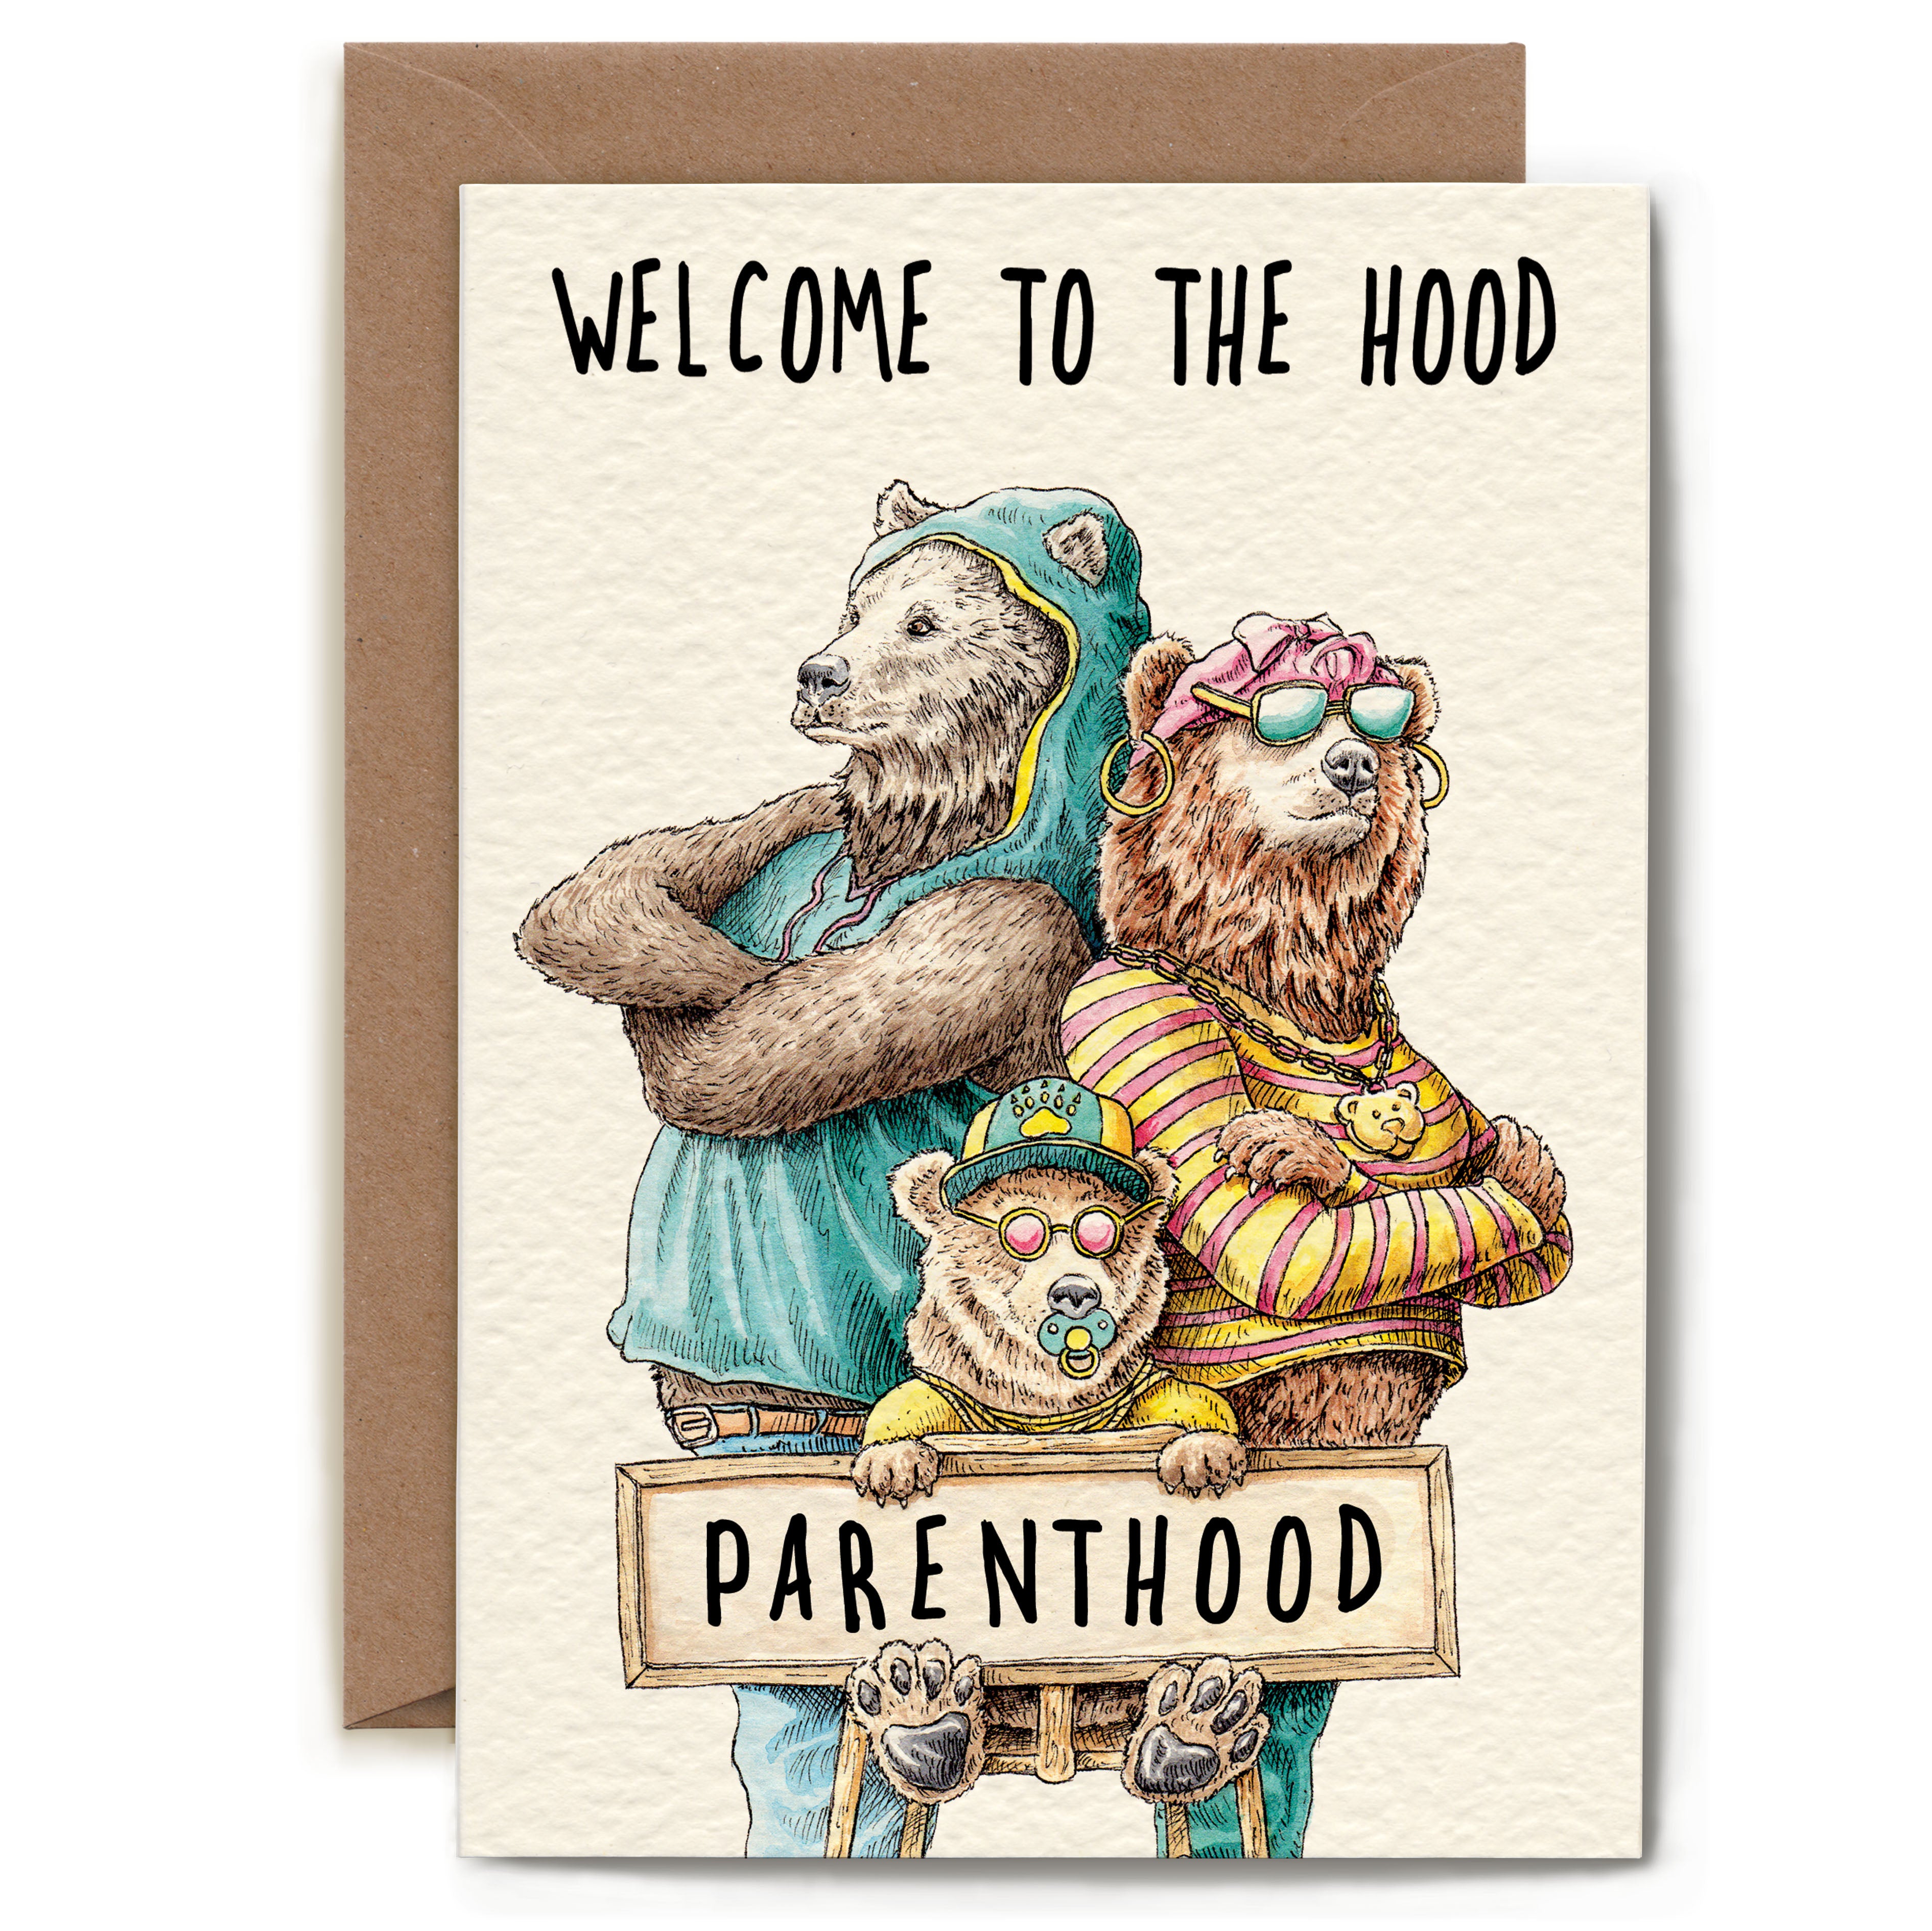 Parenthood Card by Bewilderbeest